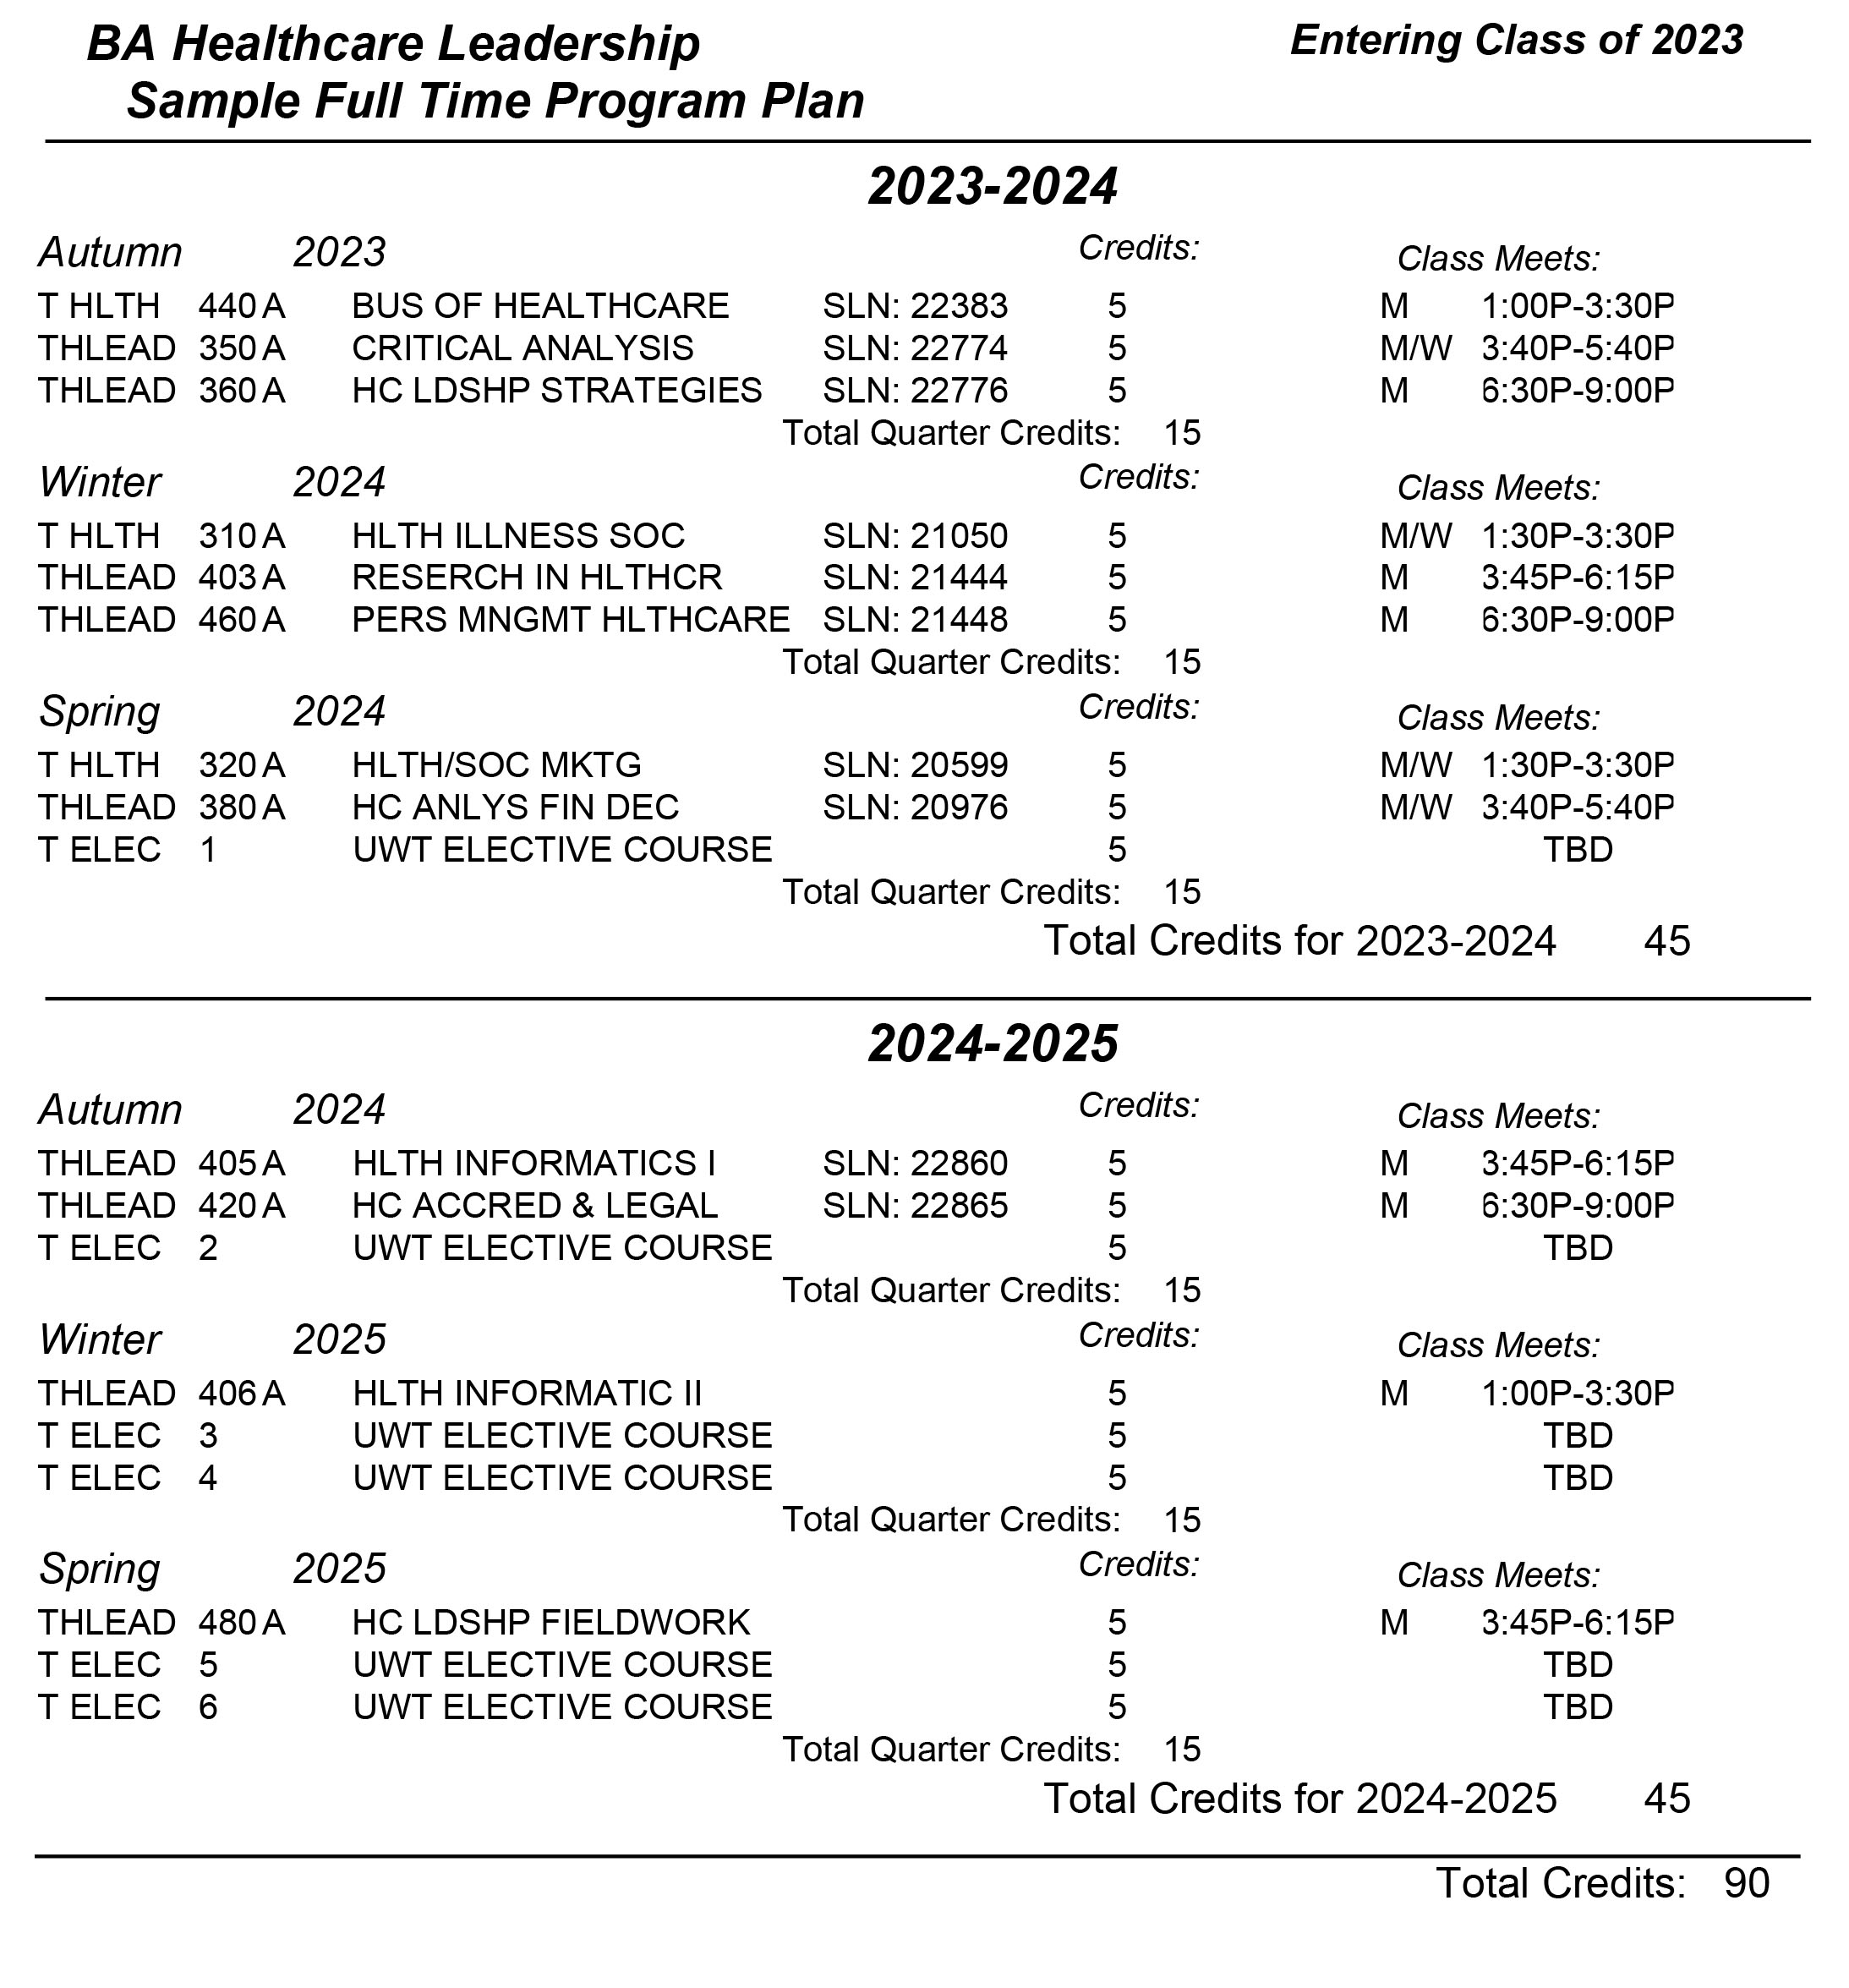 2023 BAHCL Sample Program Plan